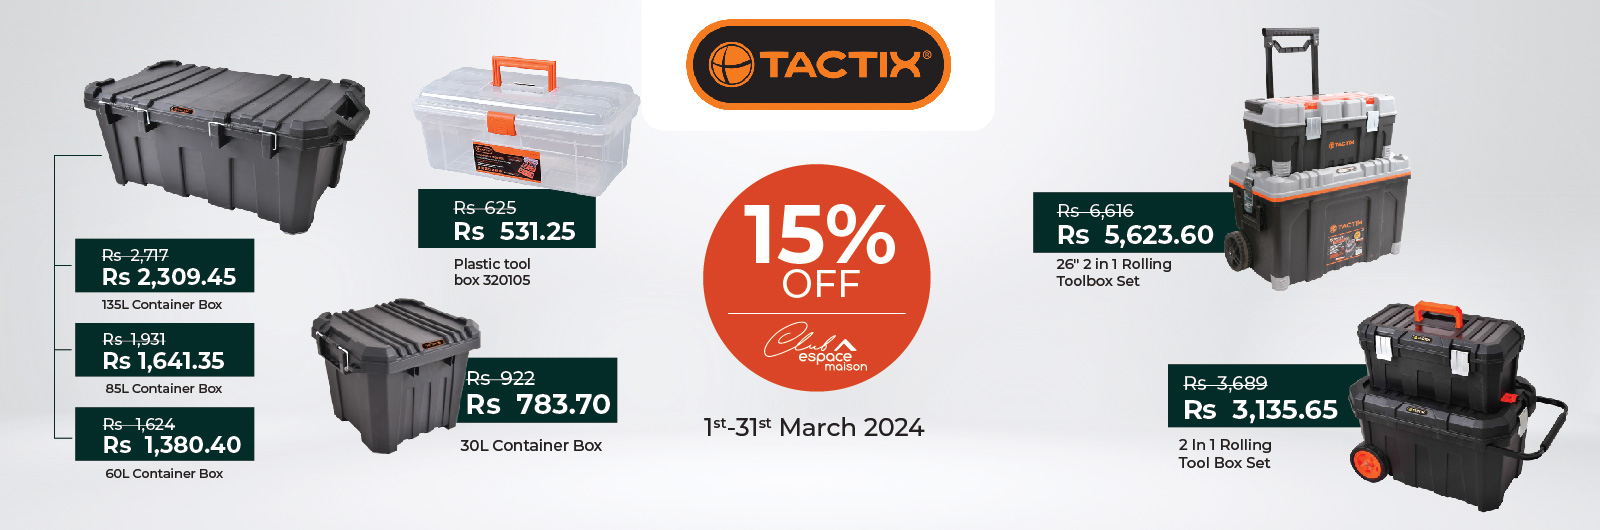 tactix Hardware 15% Discount